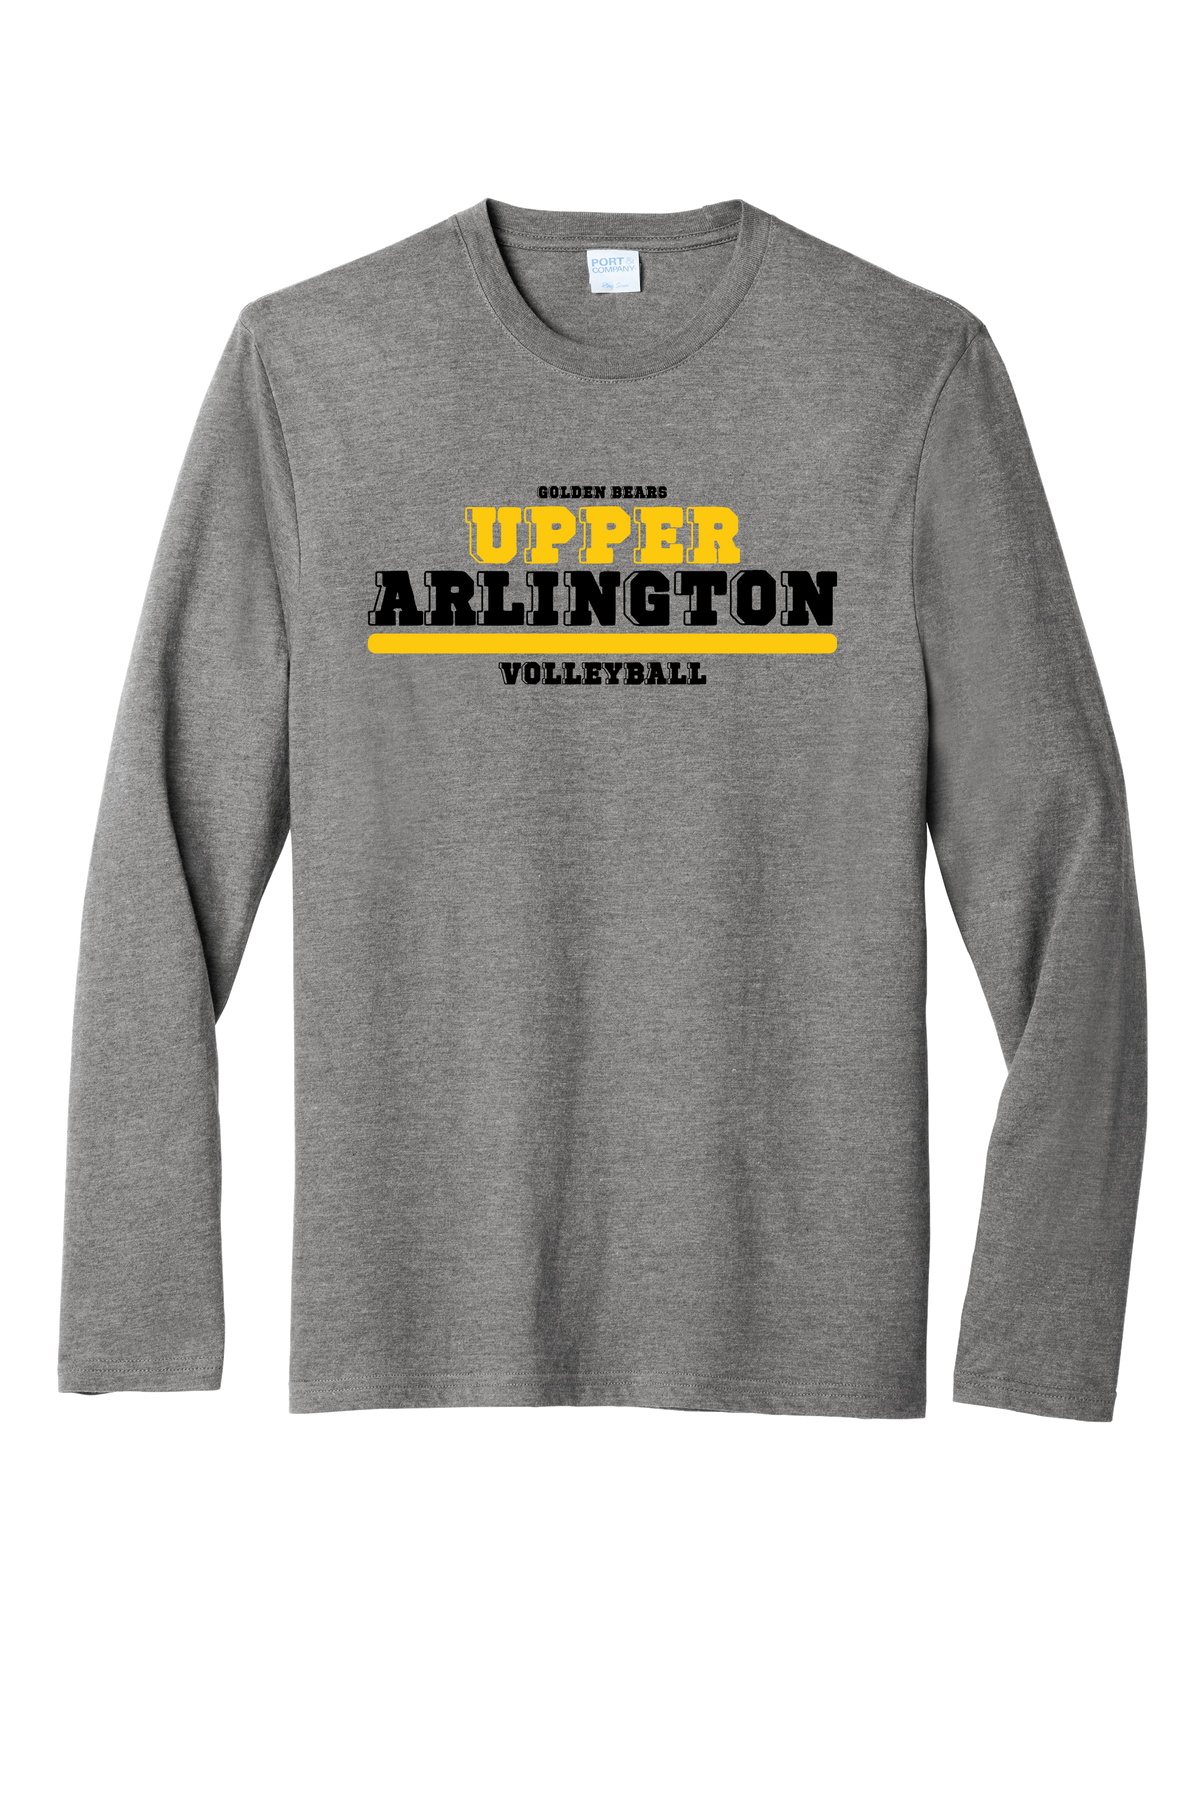 Upper Arlington Boy's Volleyball | Street Series | [DTF] Unisex Long Sleeve T-Shirt #UAV016 Graphite